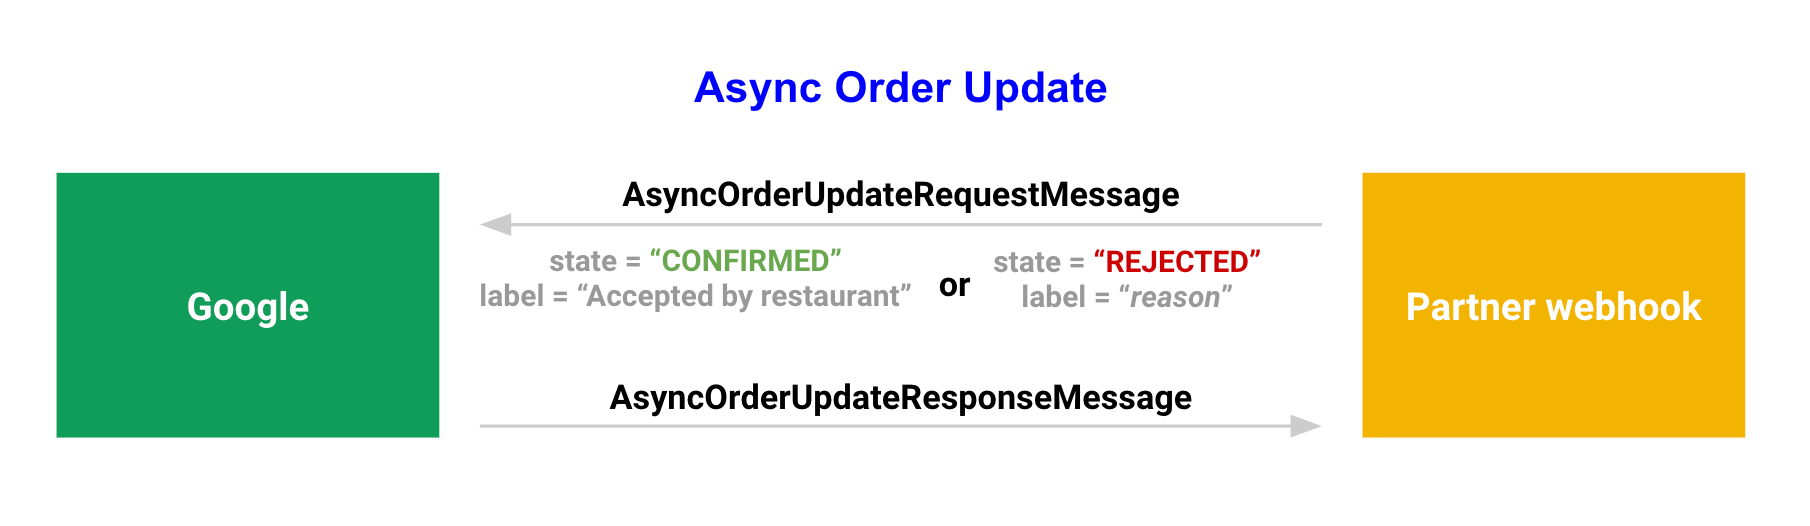 Order update diagram